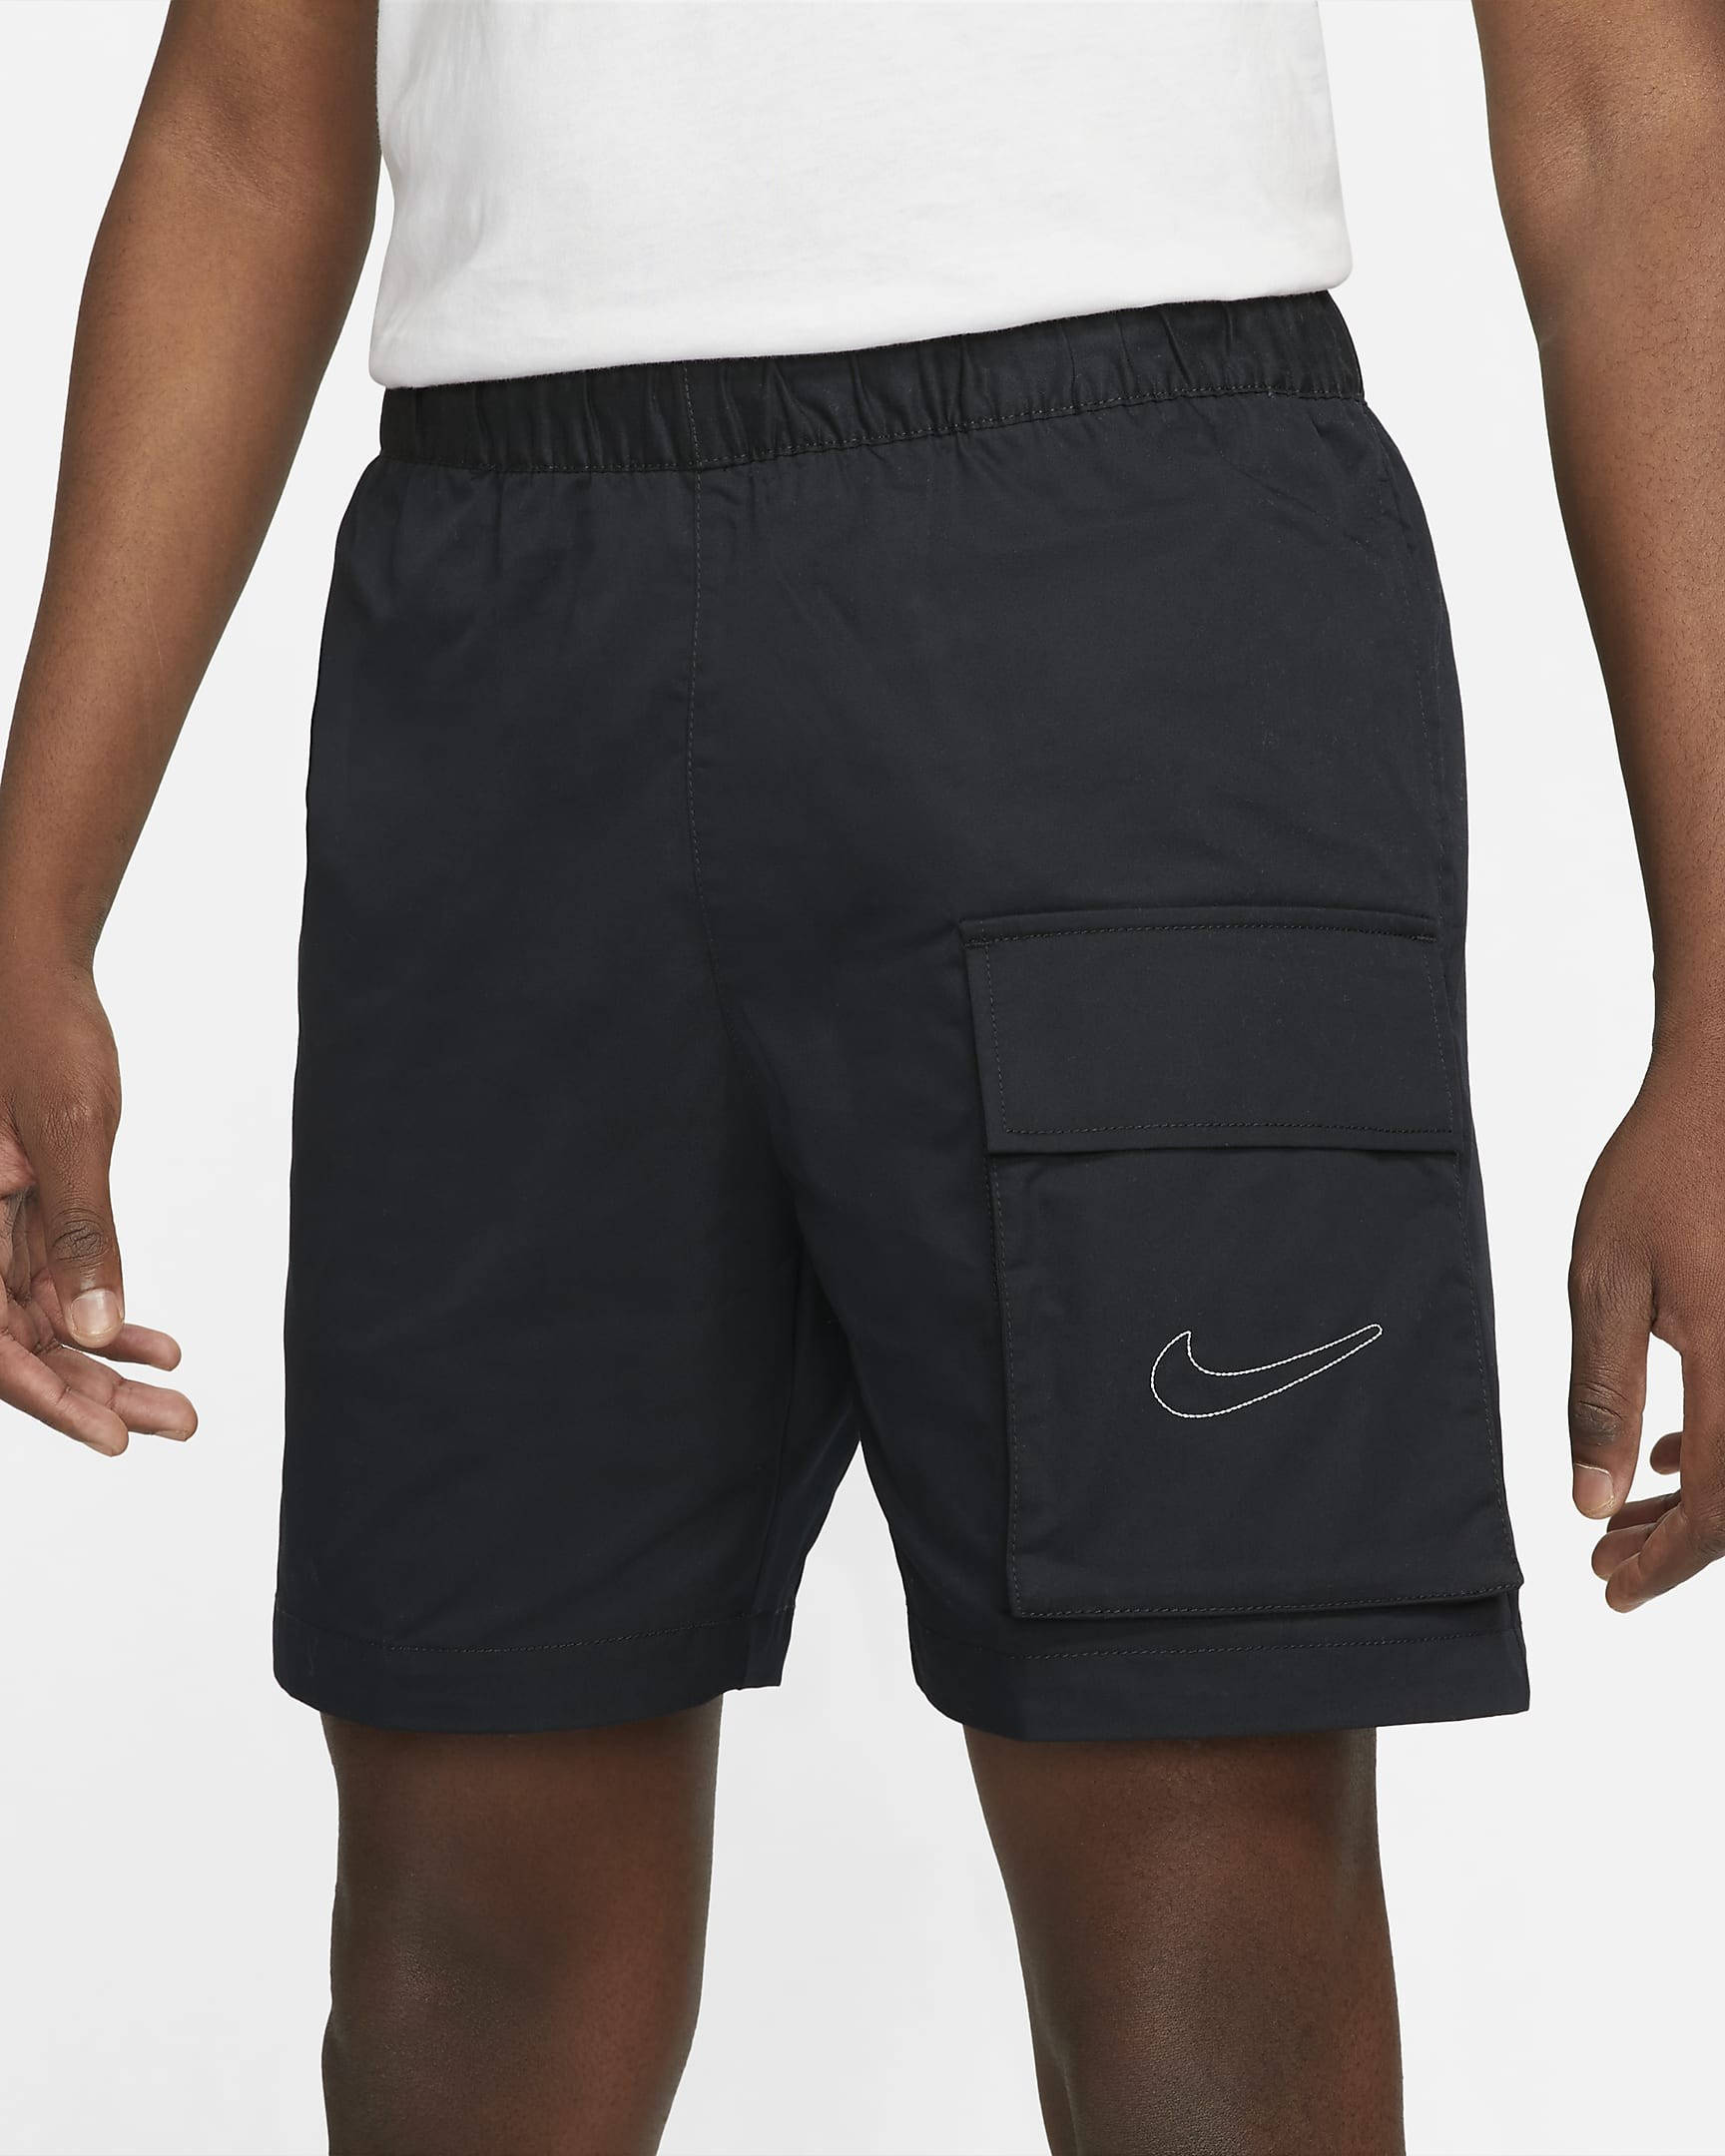 Nike Sportswear Twill Shorts - Black | The Sole Supplier